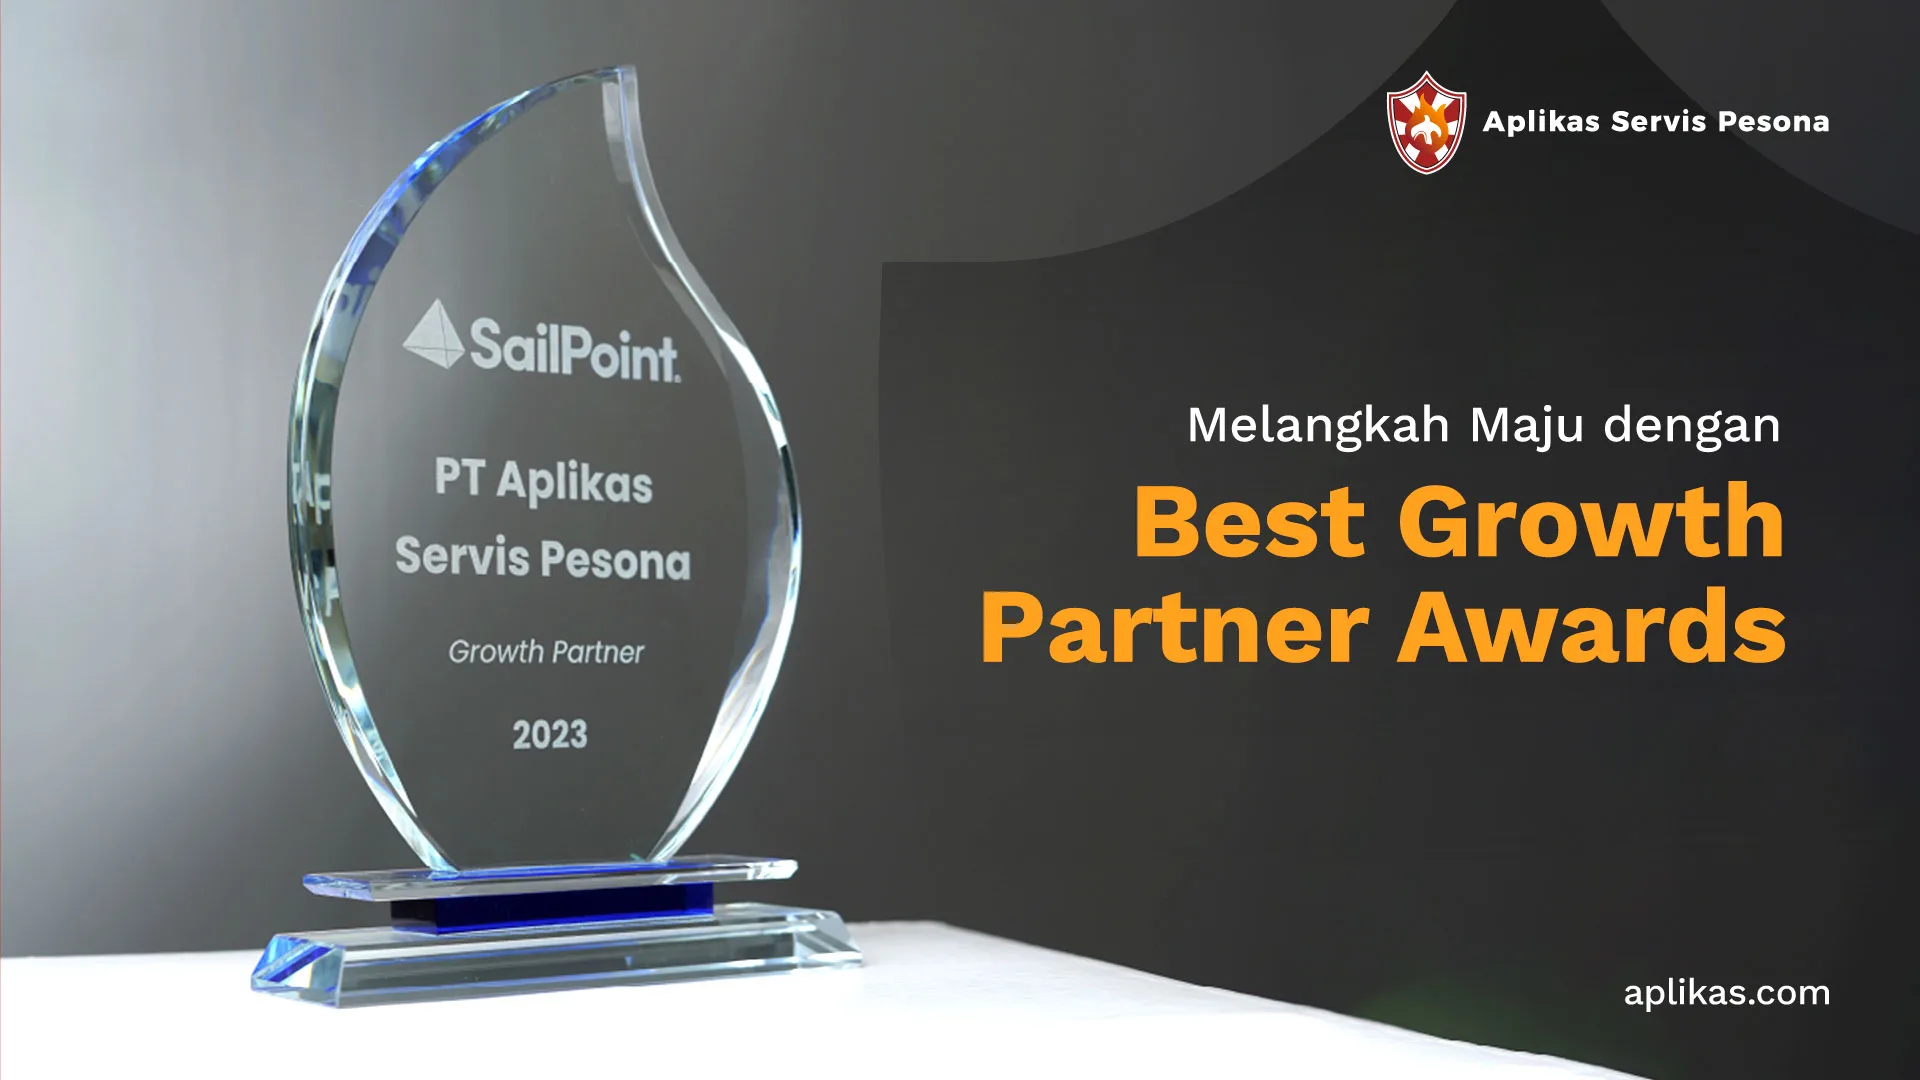 Aplikas Servis Pesona: Melangkah Maju dengan Best Growth Partner Awards